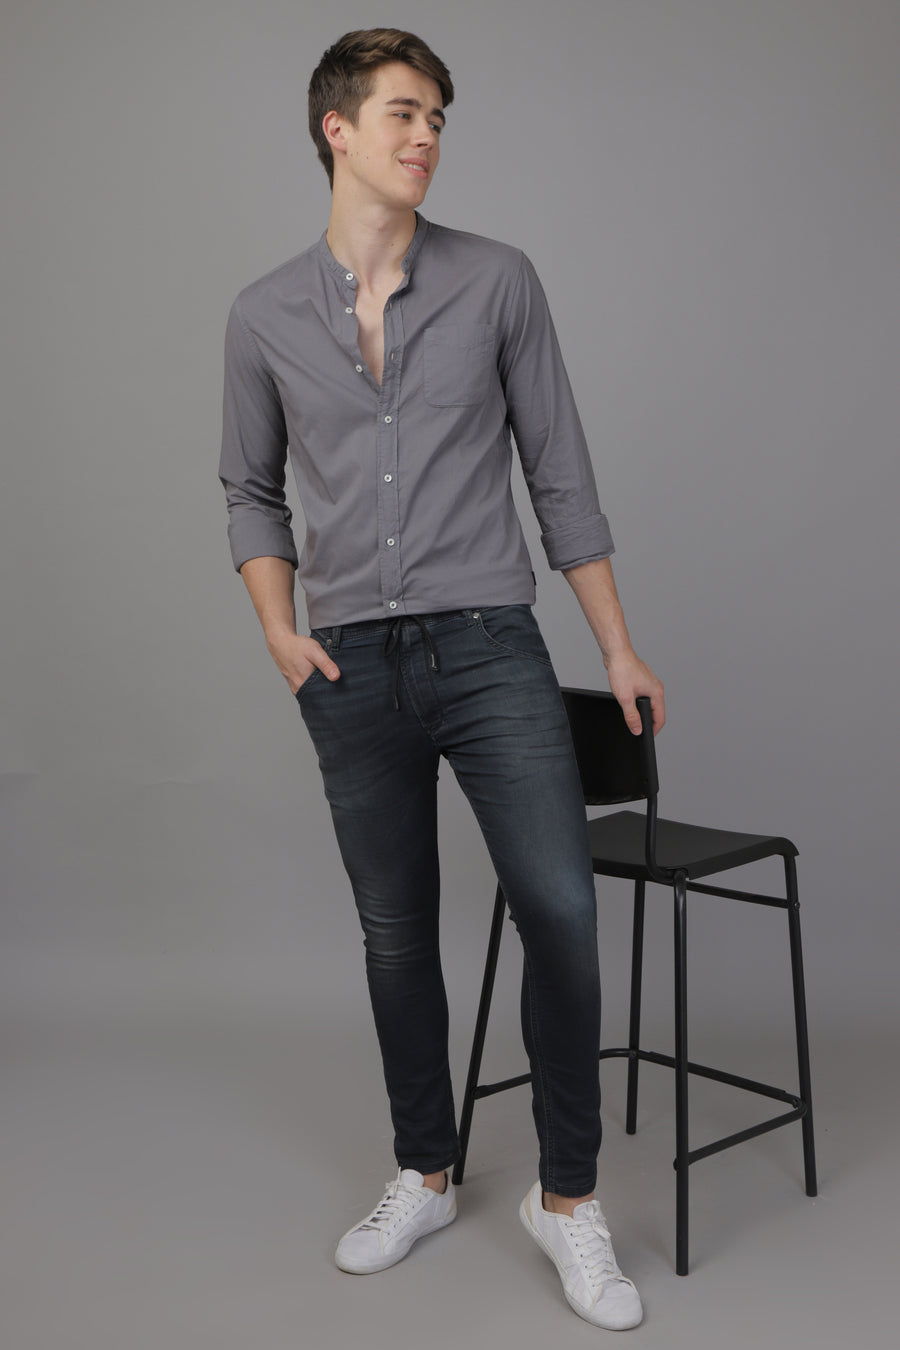 Noor - Stand Up Collar Solid Shirt - Grey